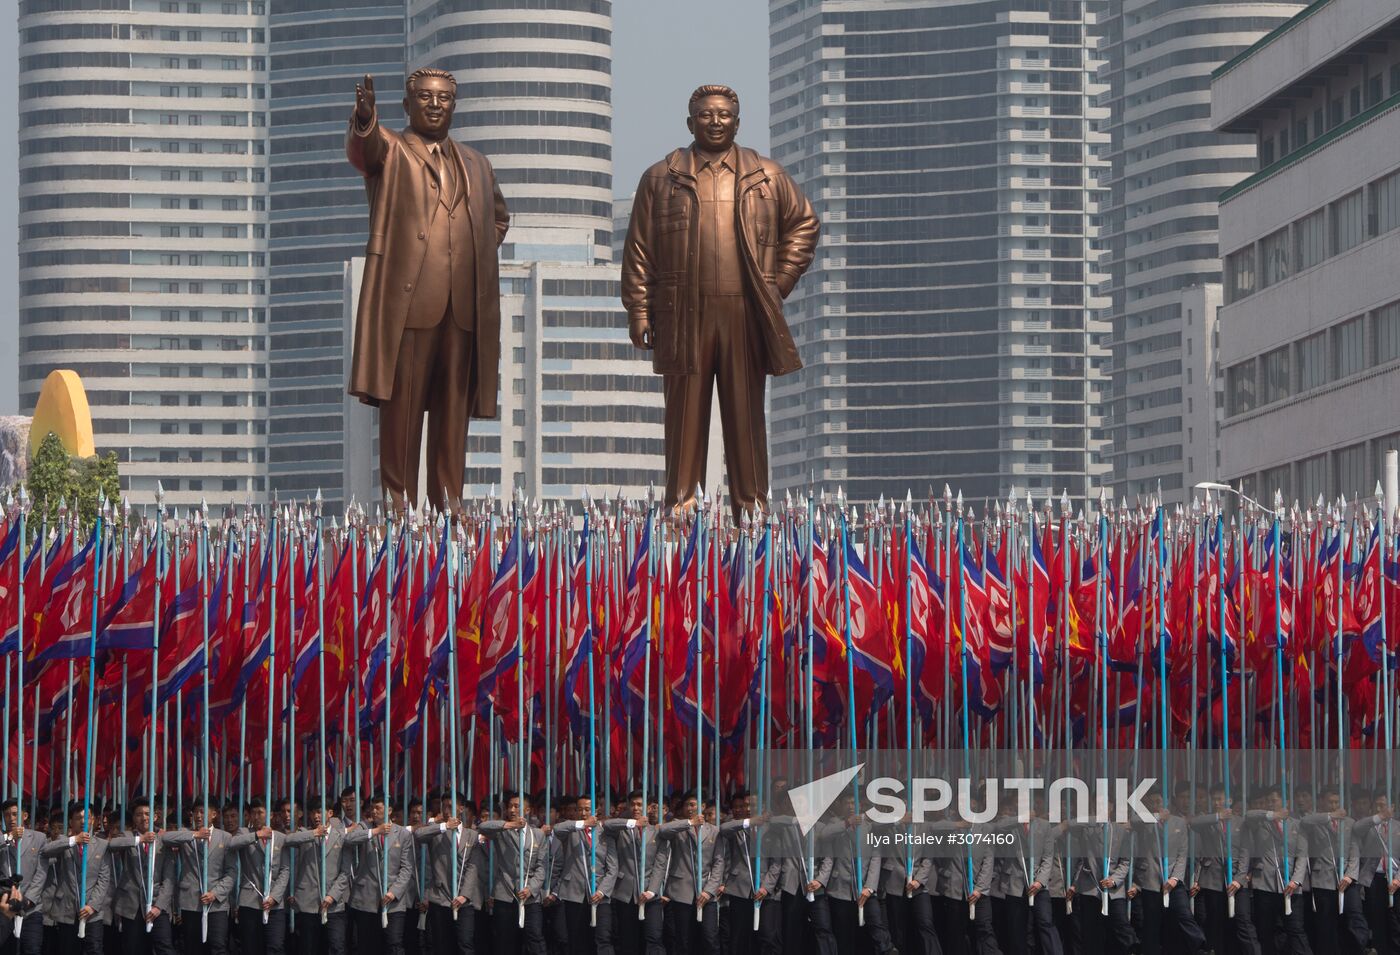 Festive events marking 105th birthday of Kim Il-Sung in North Korea